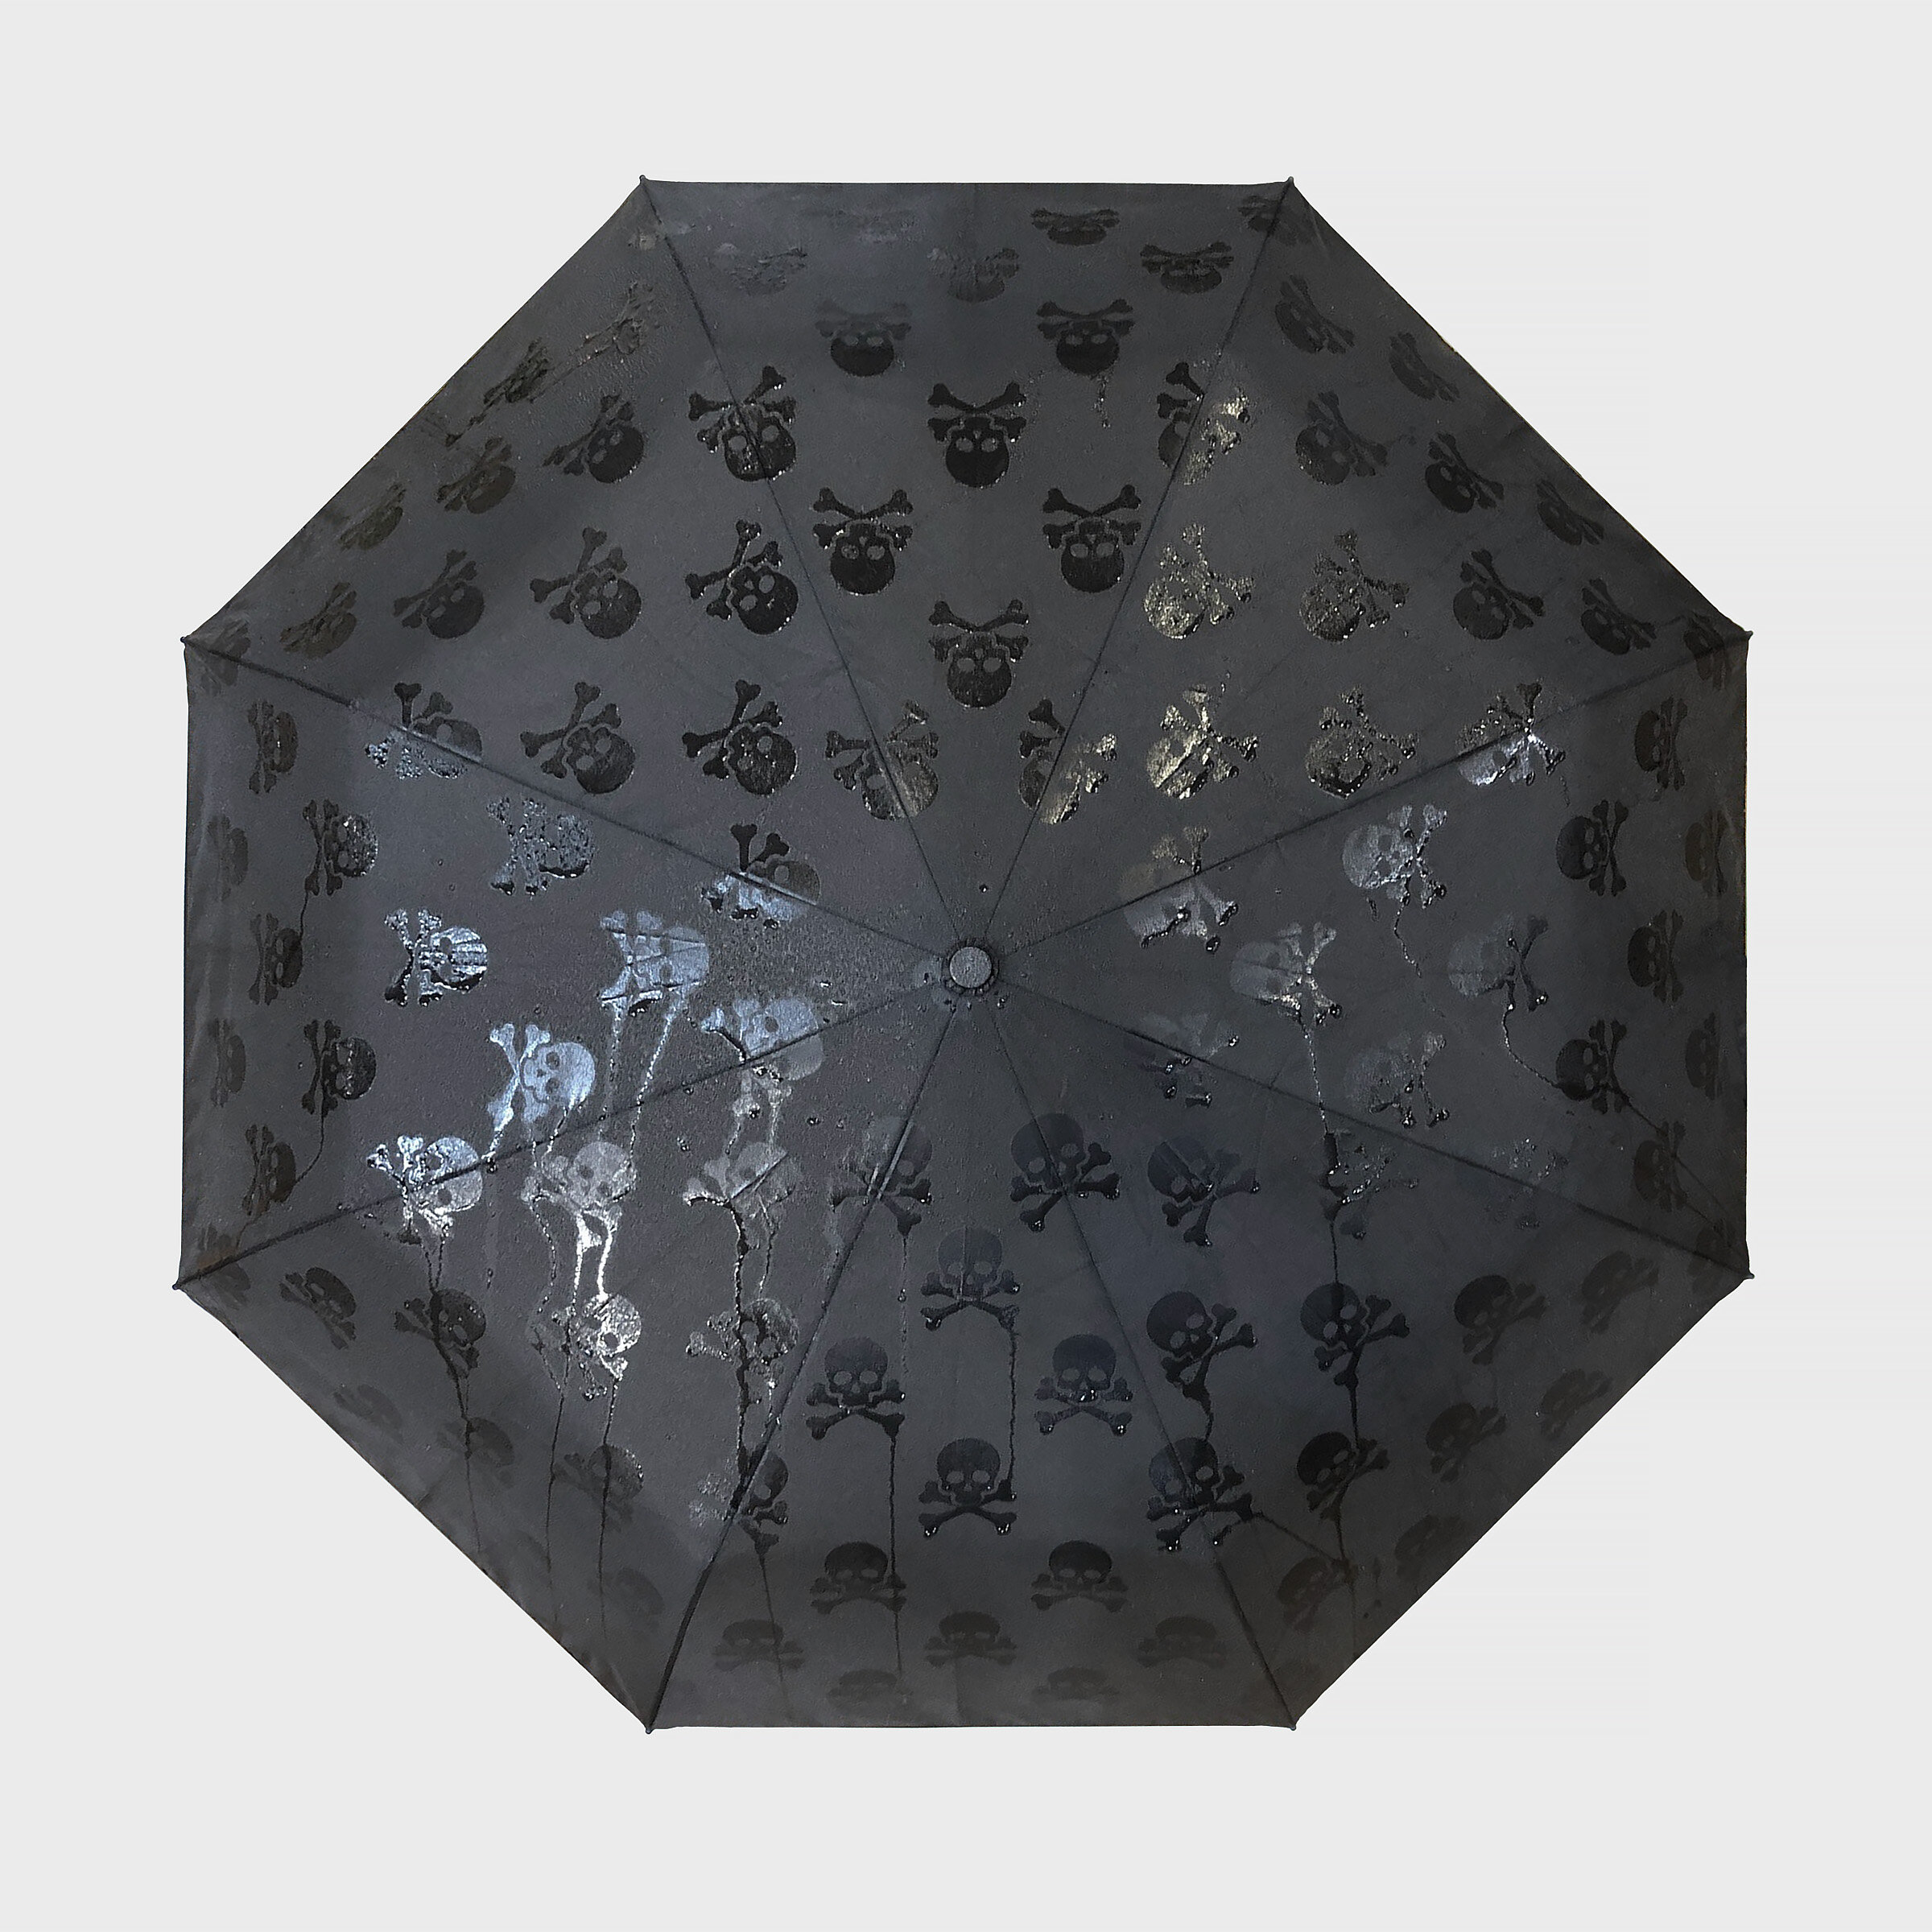 Wet Umbrella with Skulls